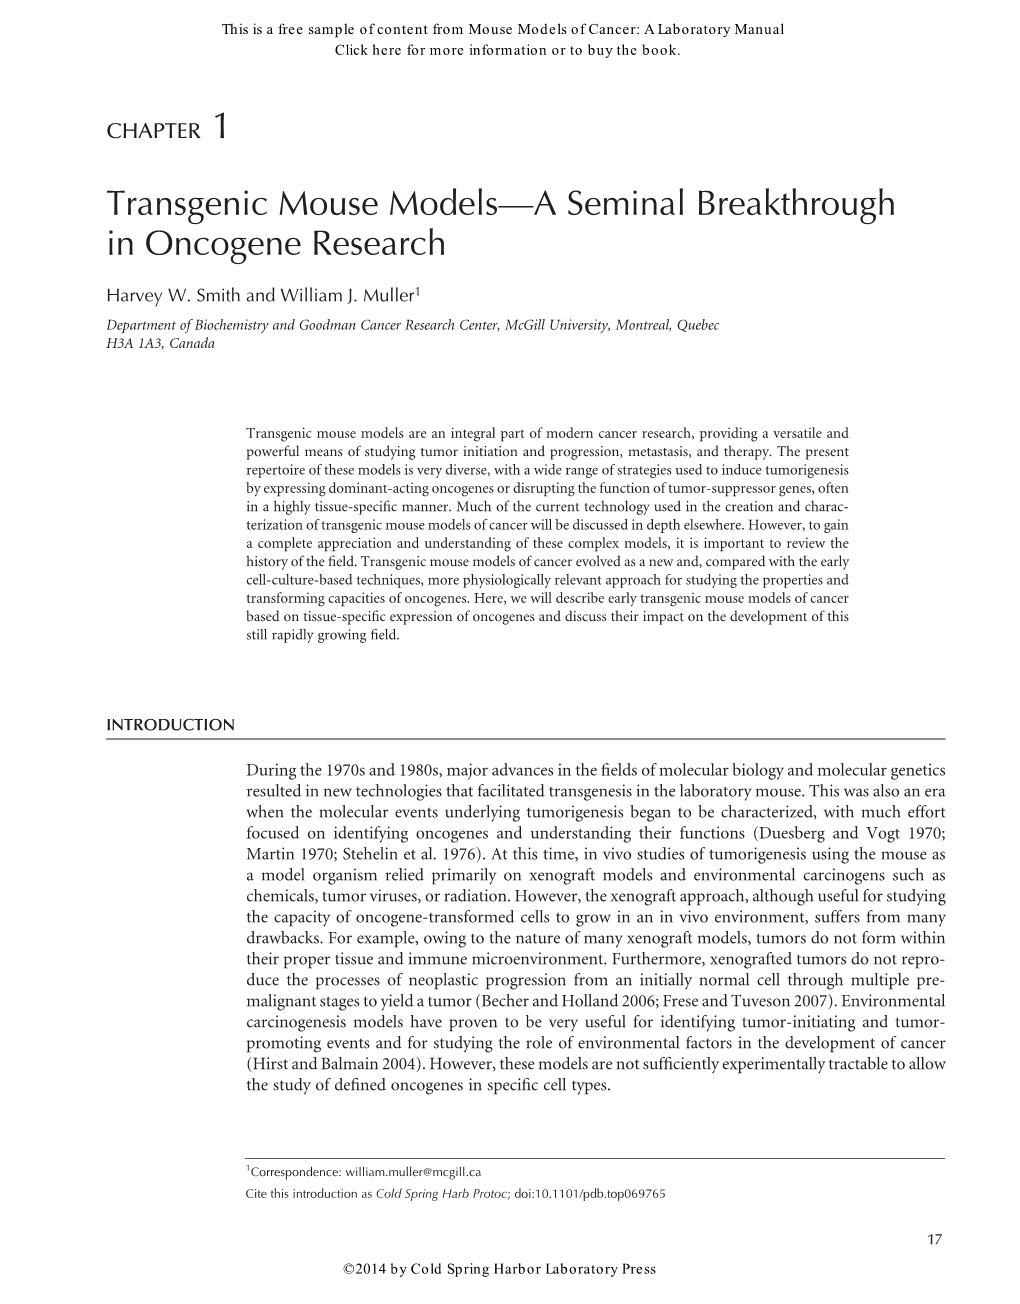 Transgenic Mouse Models—A Seminal Breakthrough in Oncogene Research